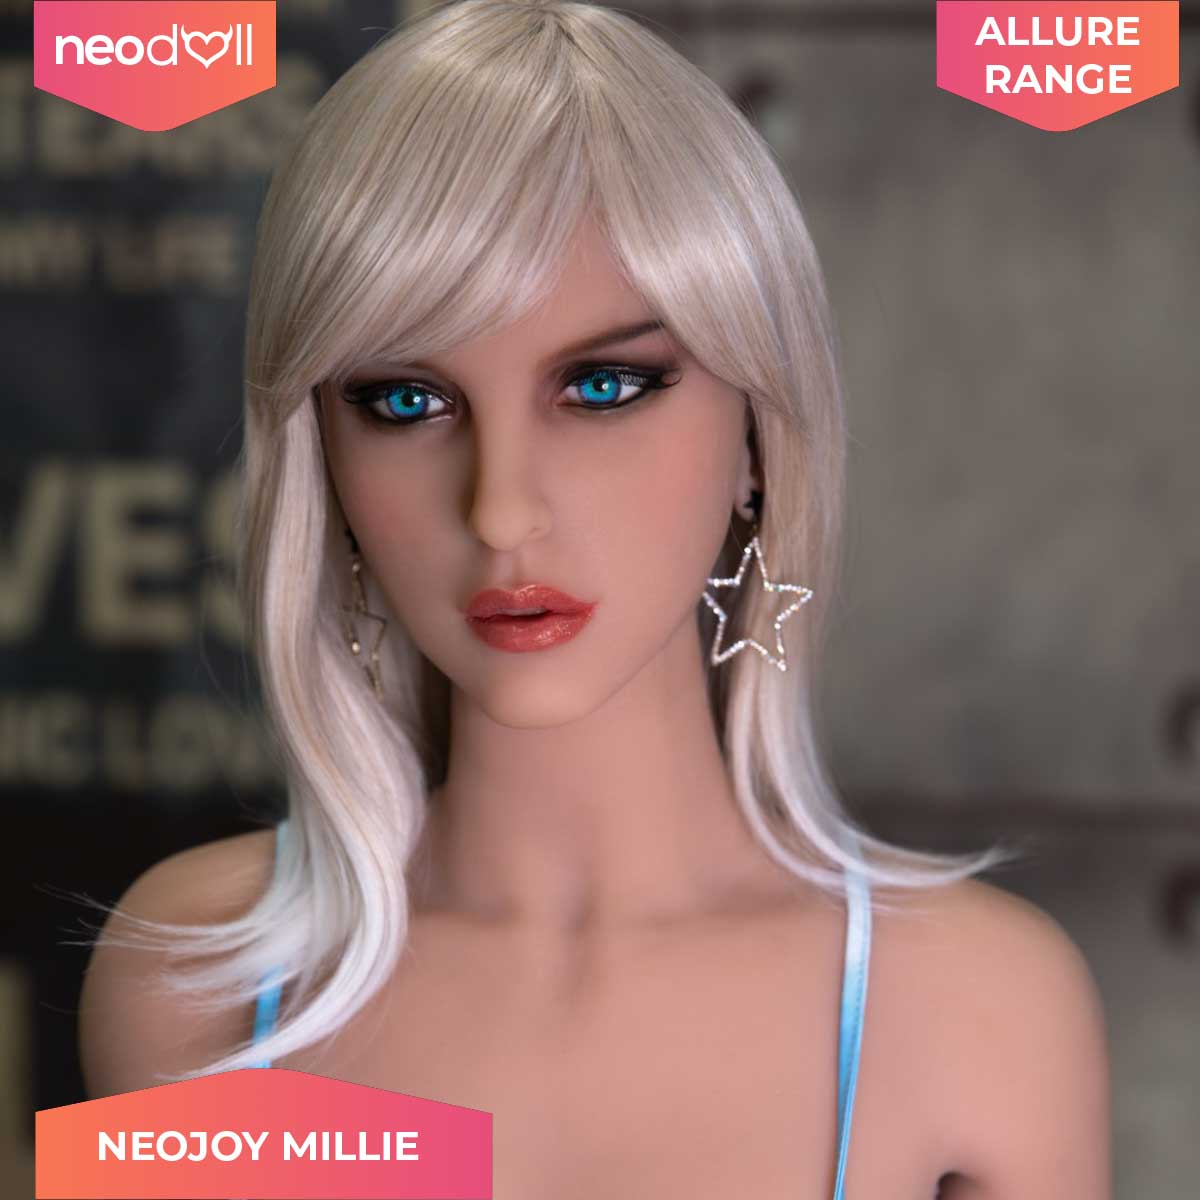 Neodoll Allure Millie - Realistic Sex Doll - 163cm - Tan